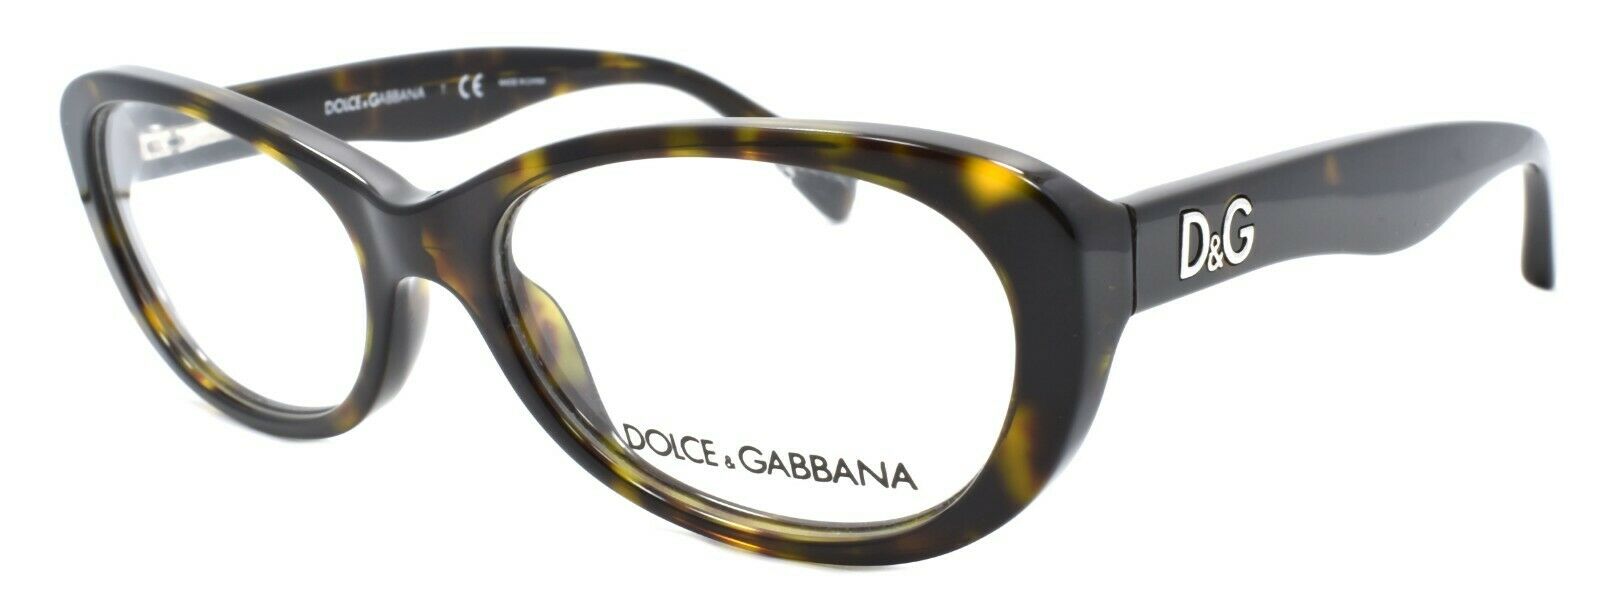 1-Dolce & Gabbana DD1248 502 Women's Eyeglasses Frames 51-17-135 Dark Havana-679420525150-IKSpecs